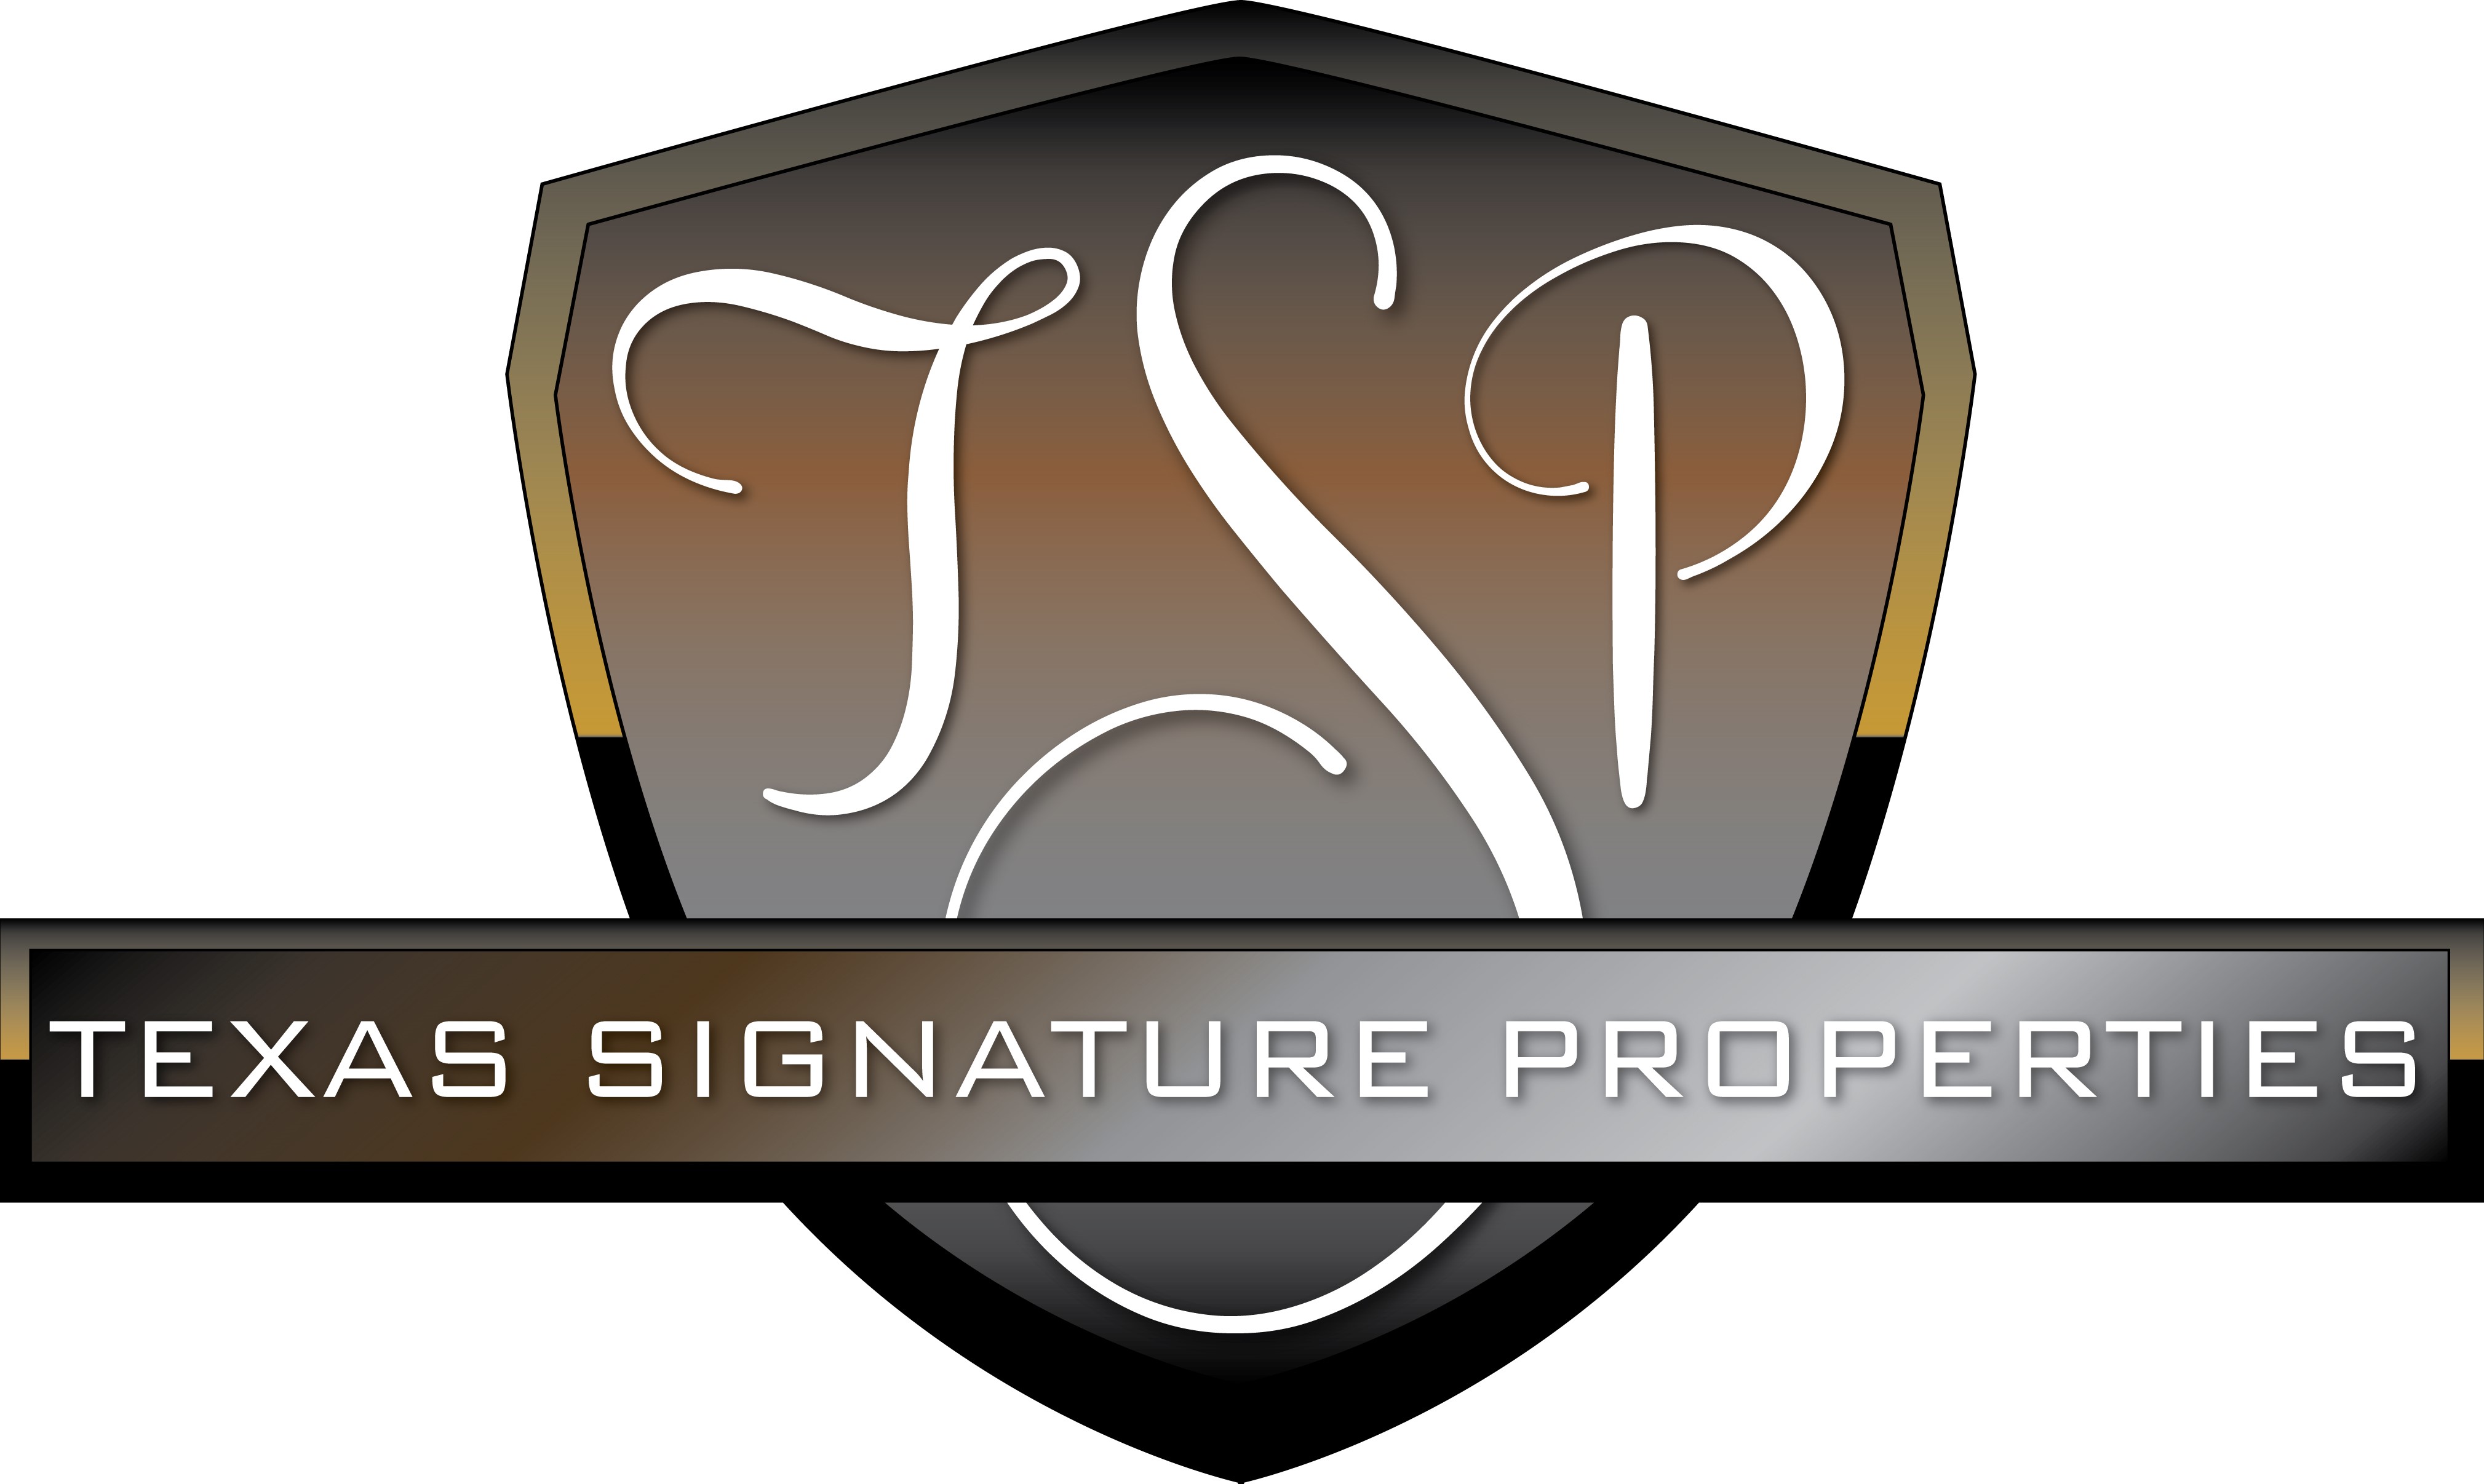 Texas Signature Properties - Professional Management